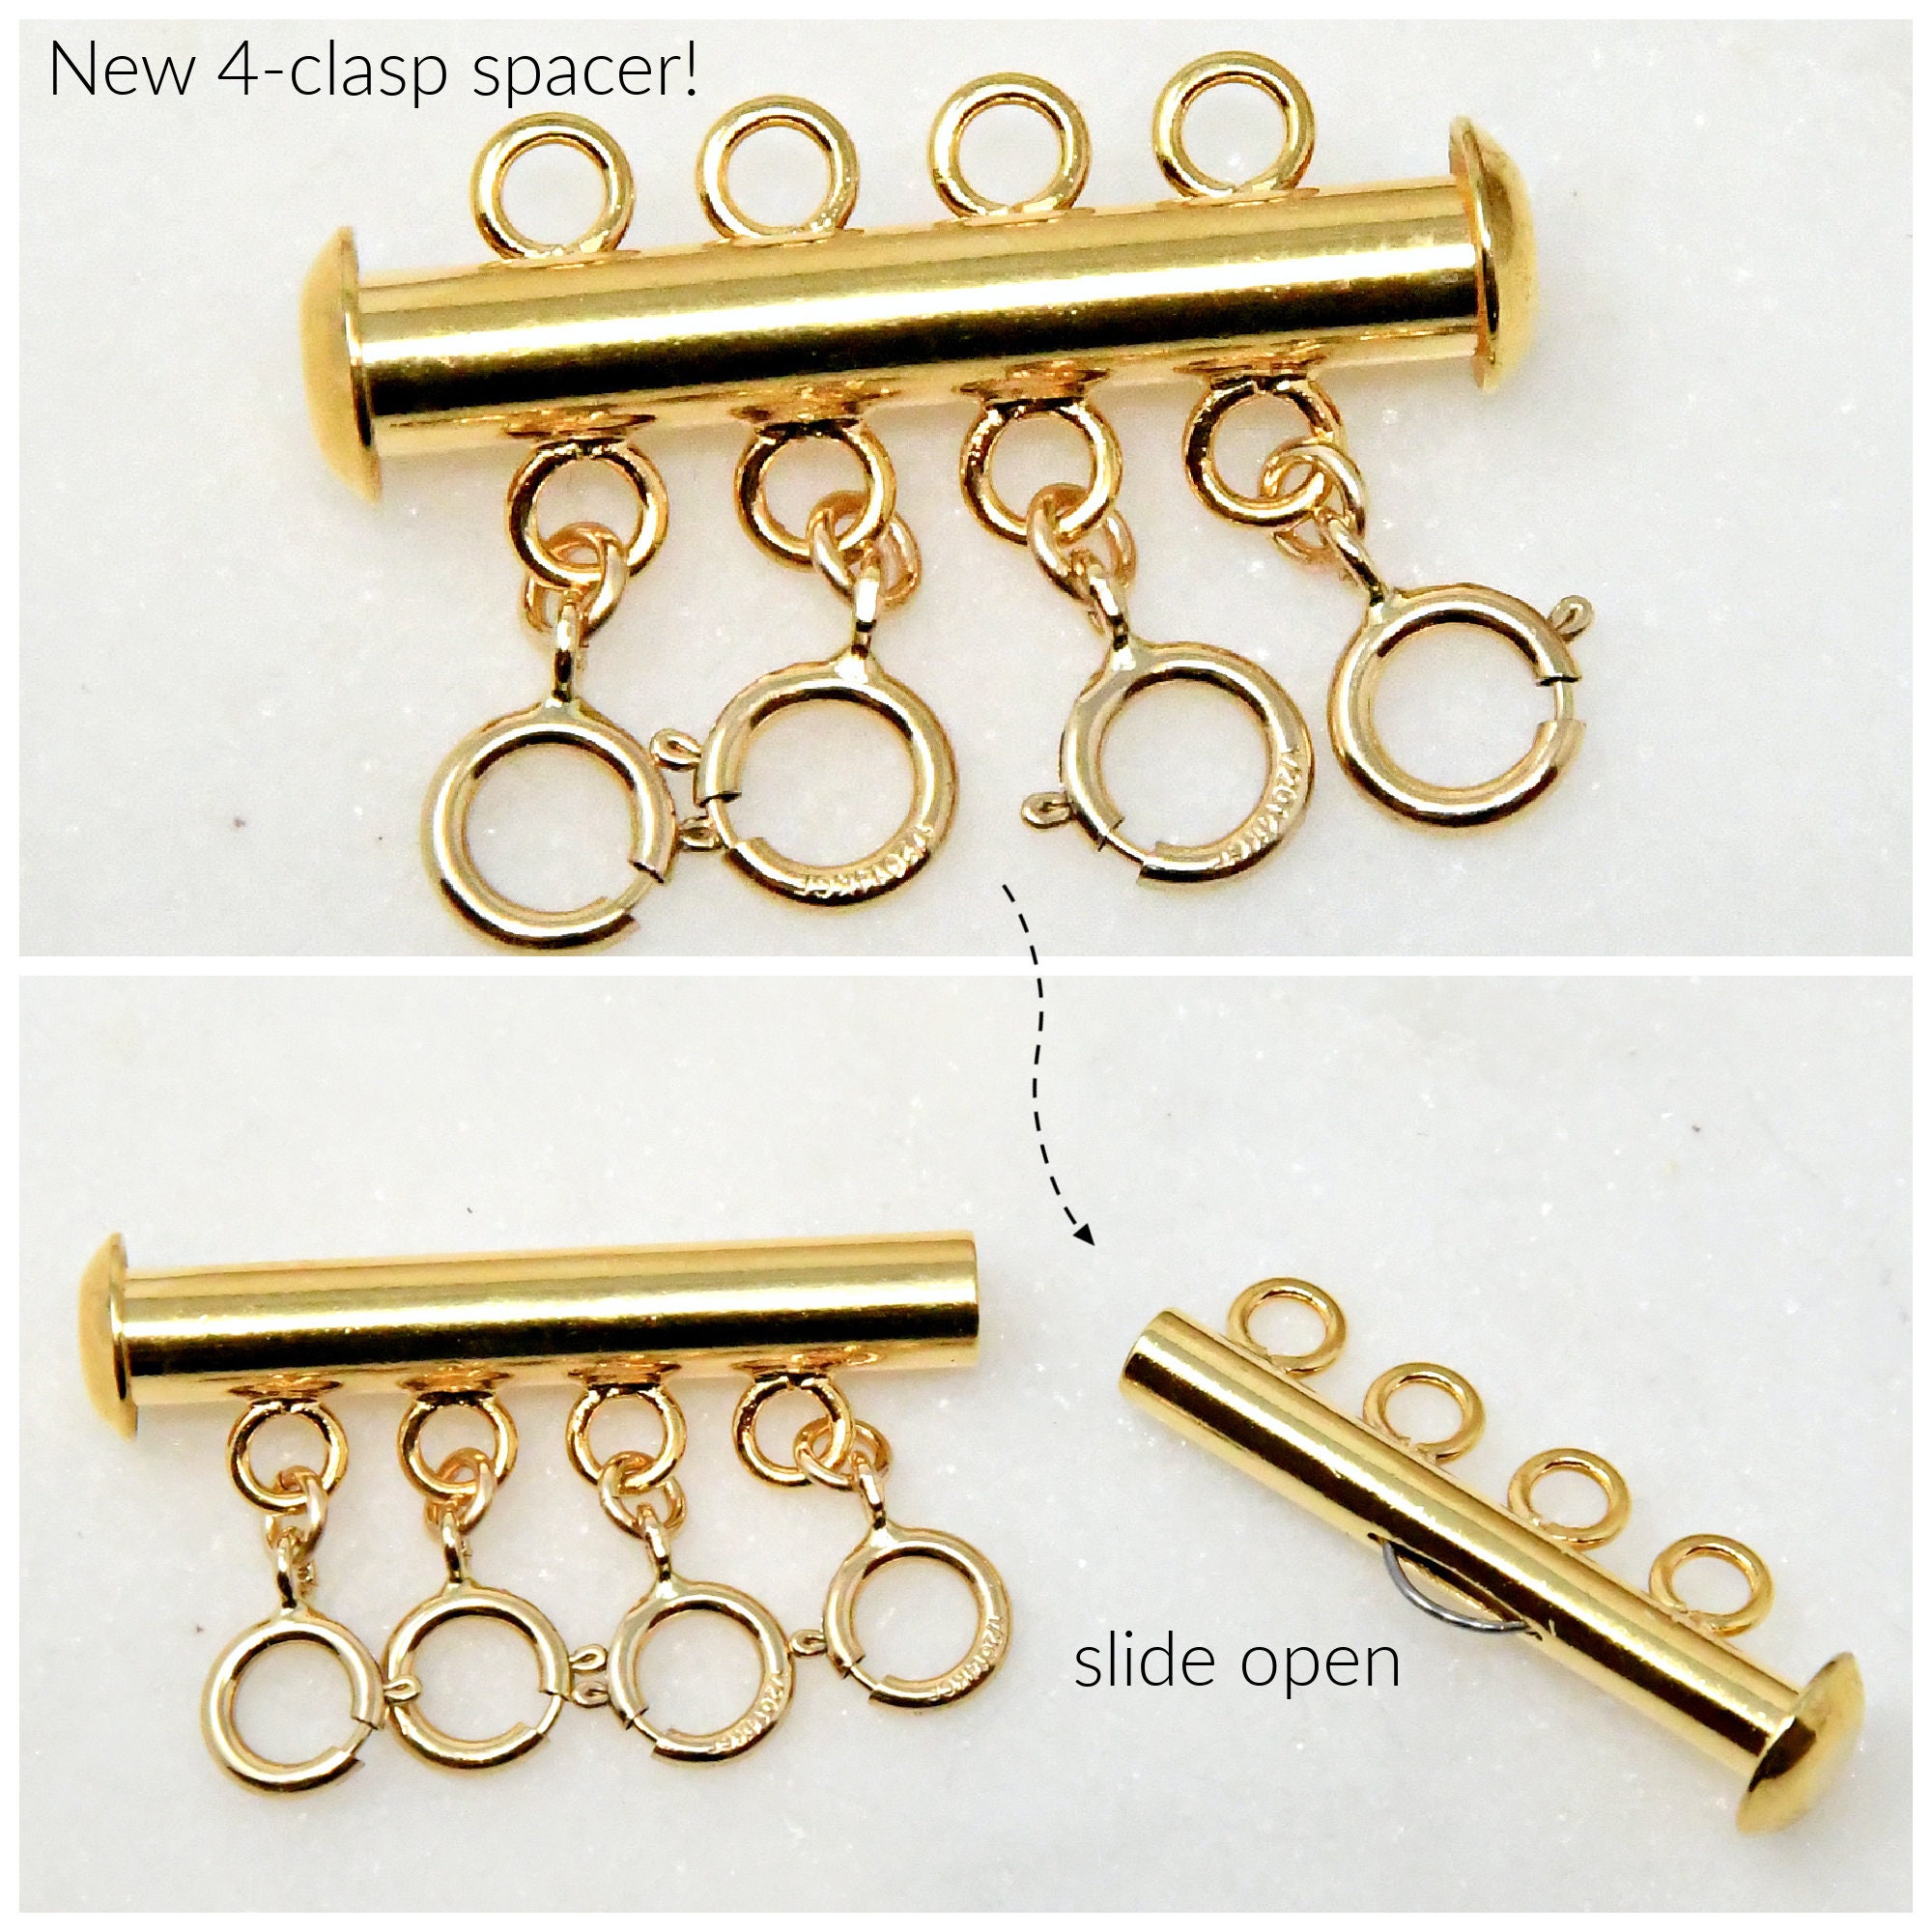 Joymarty Layered Necklace Spacer Clasp (3 Clasps)(SSK-01)